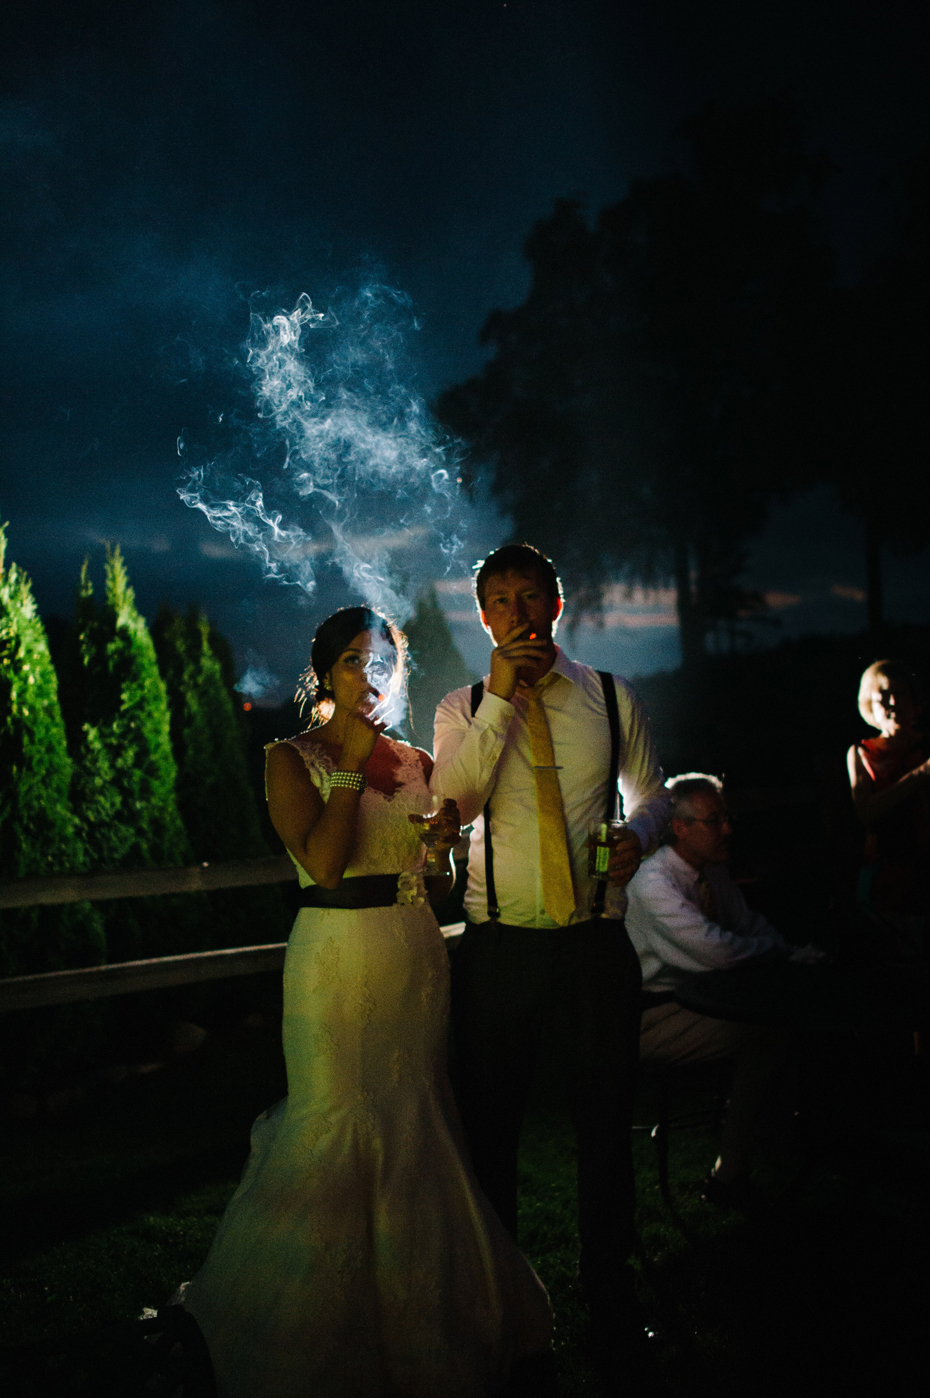 Photojournalistic Ann Arbor Michigan wedding photographer Heather Jowett presents her best photographs from 2013.